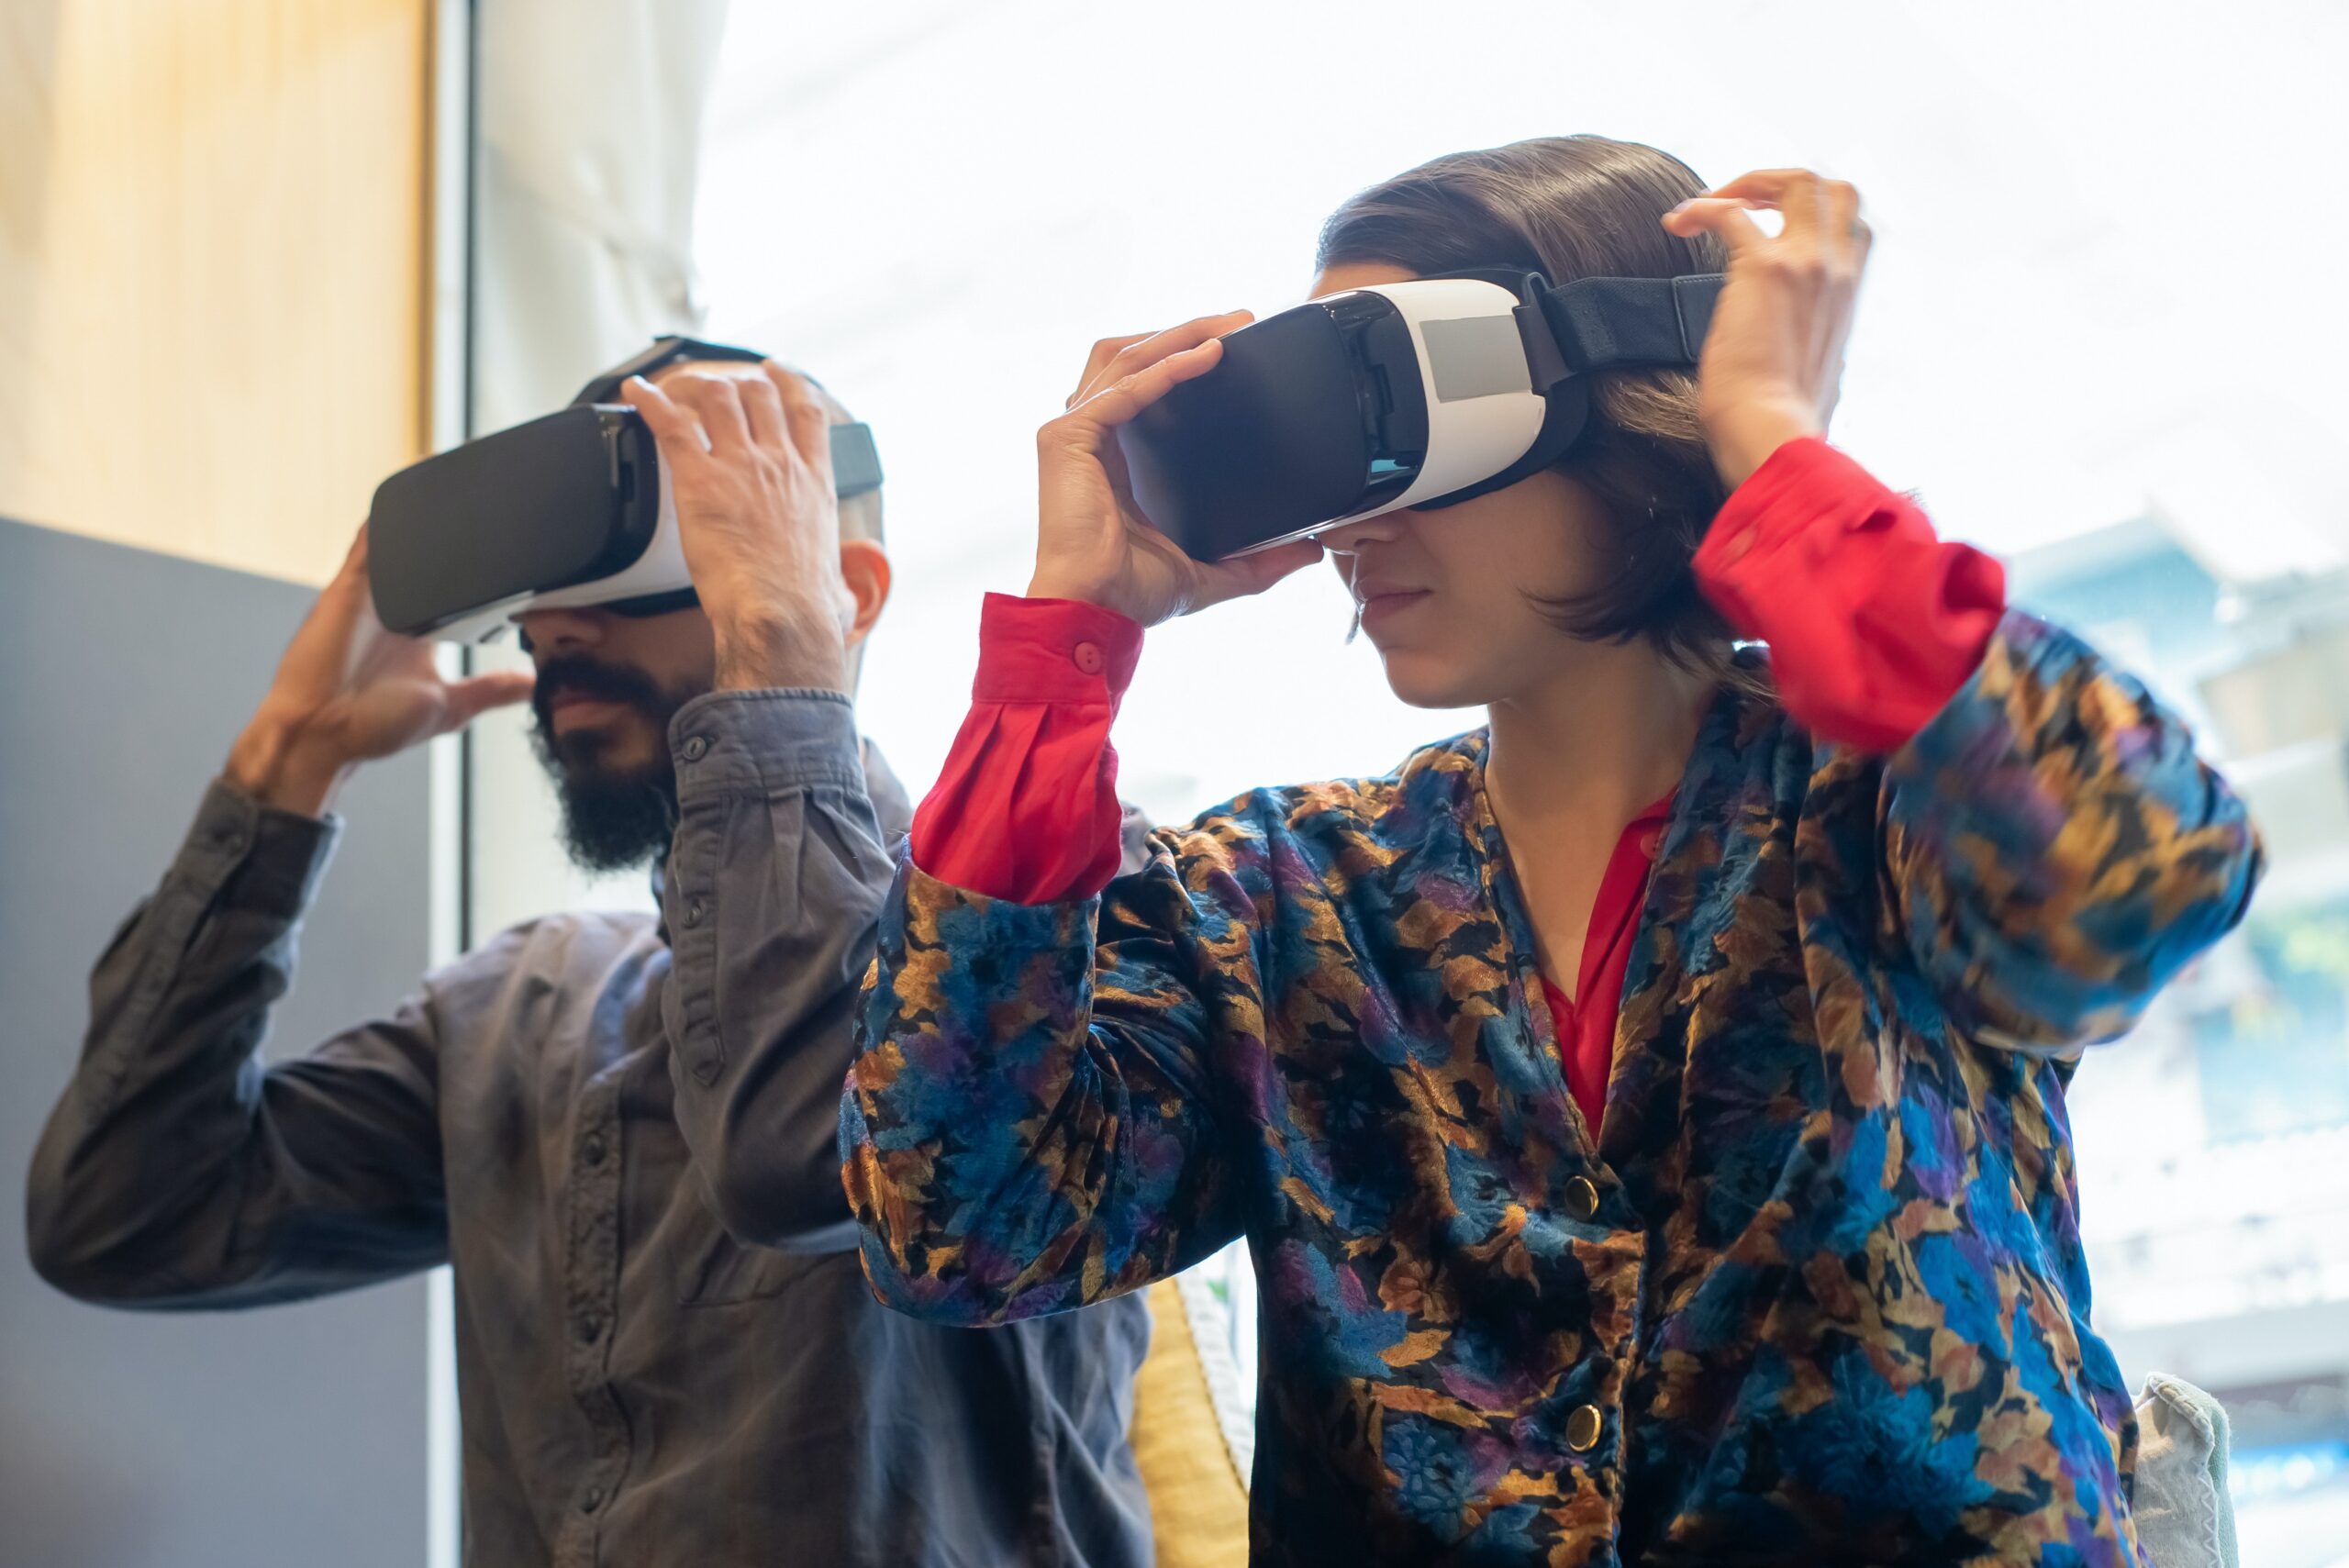 XCOM Labs Demonstrates Wireless, Glitch-free VR and AR Experiences